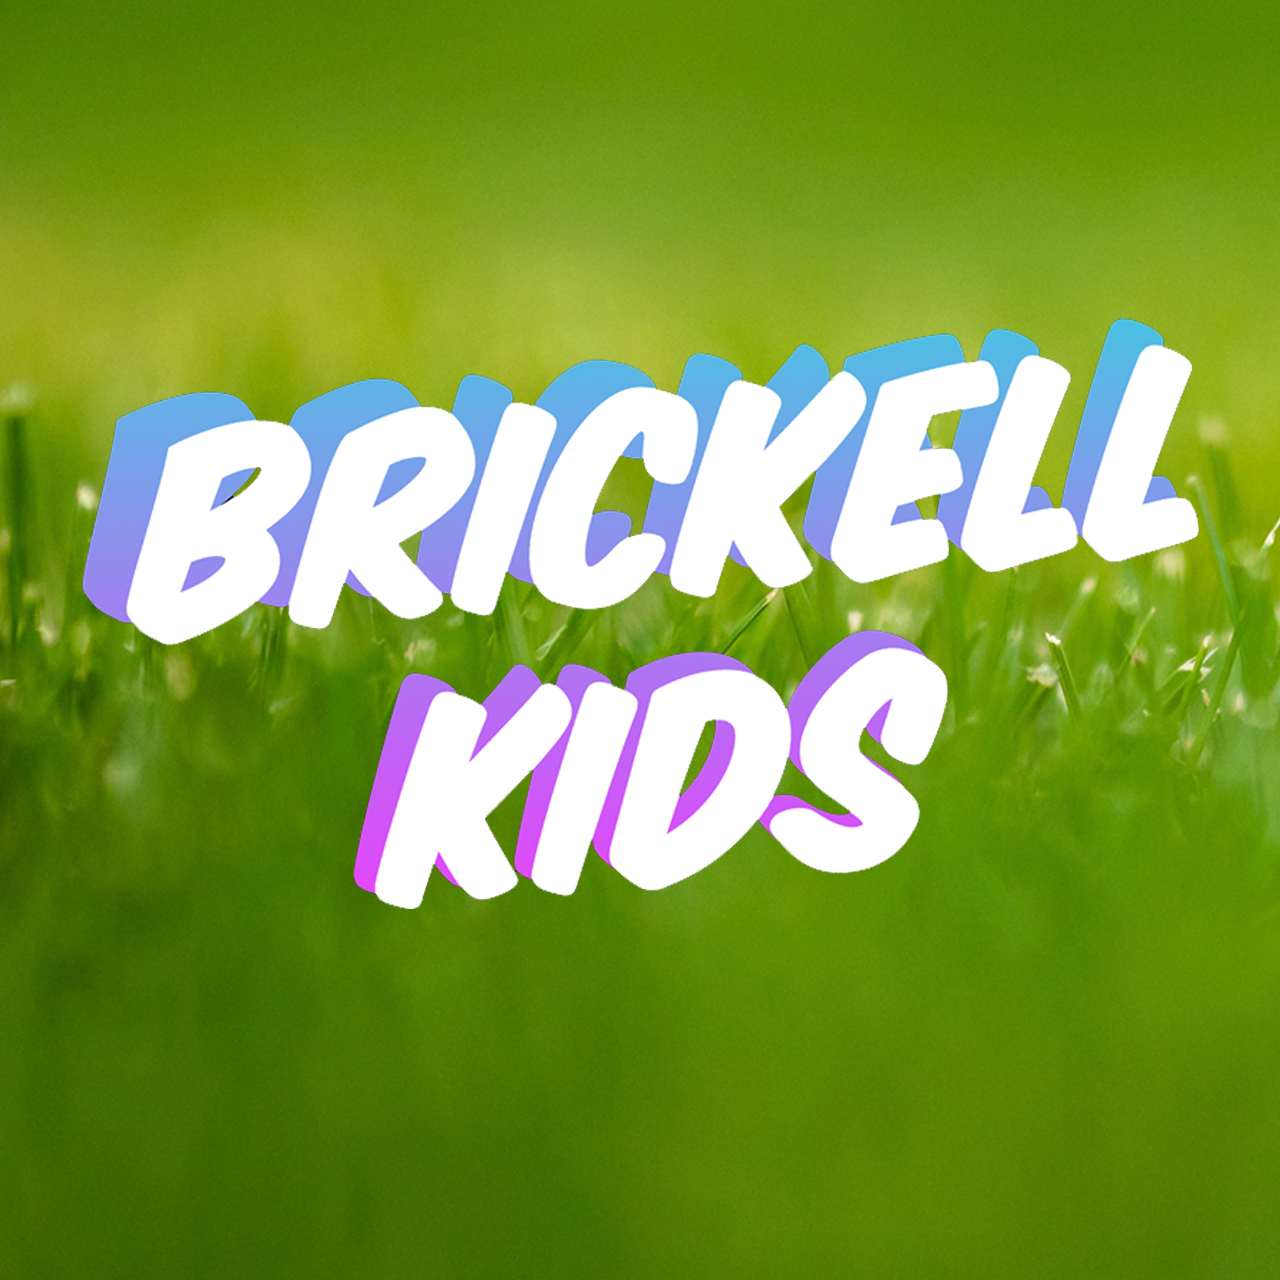 Brickell Kids Fellowship Group